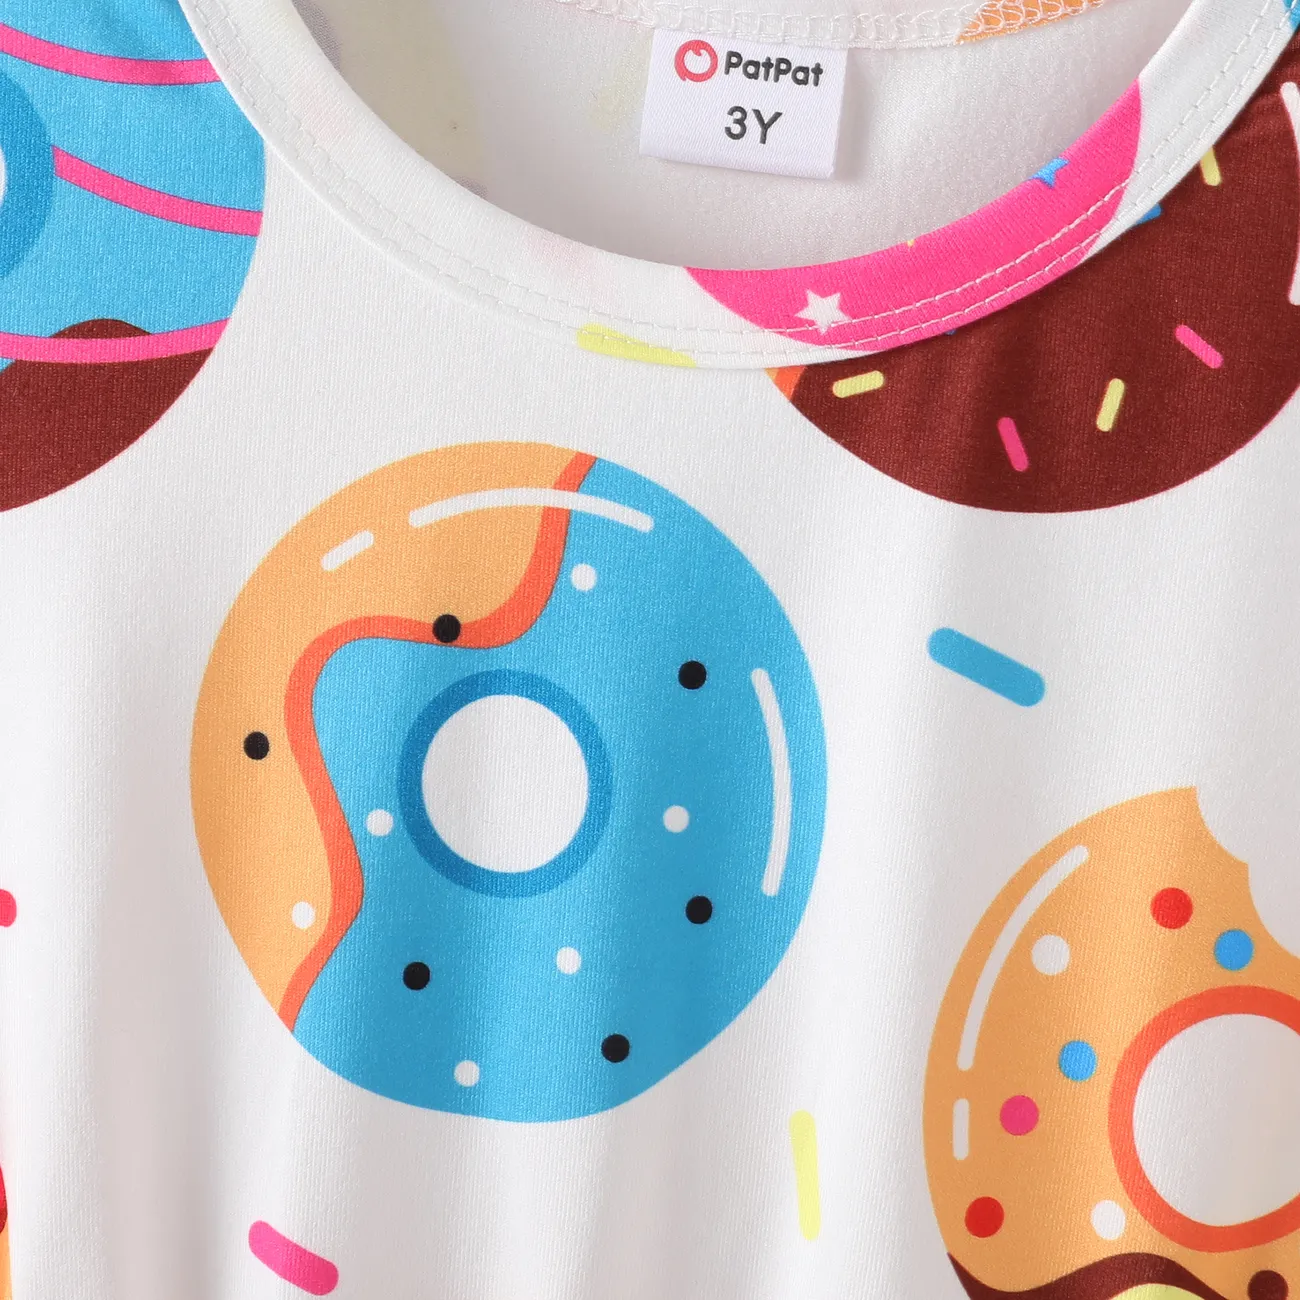 Toddler Girl Food Donut Print Short-sleeve Dress White big image 1